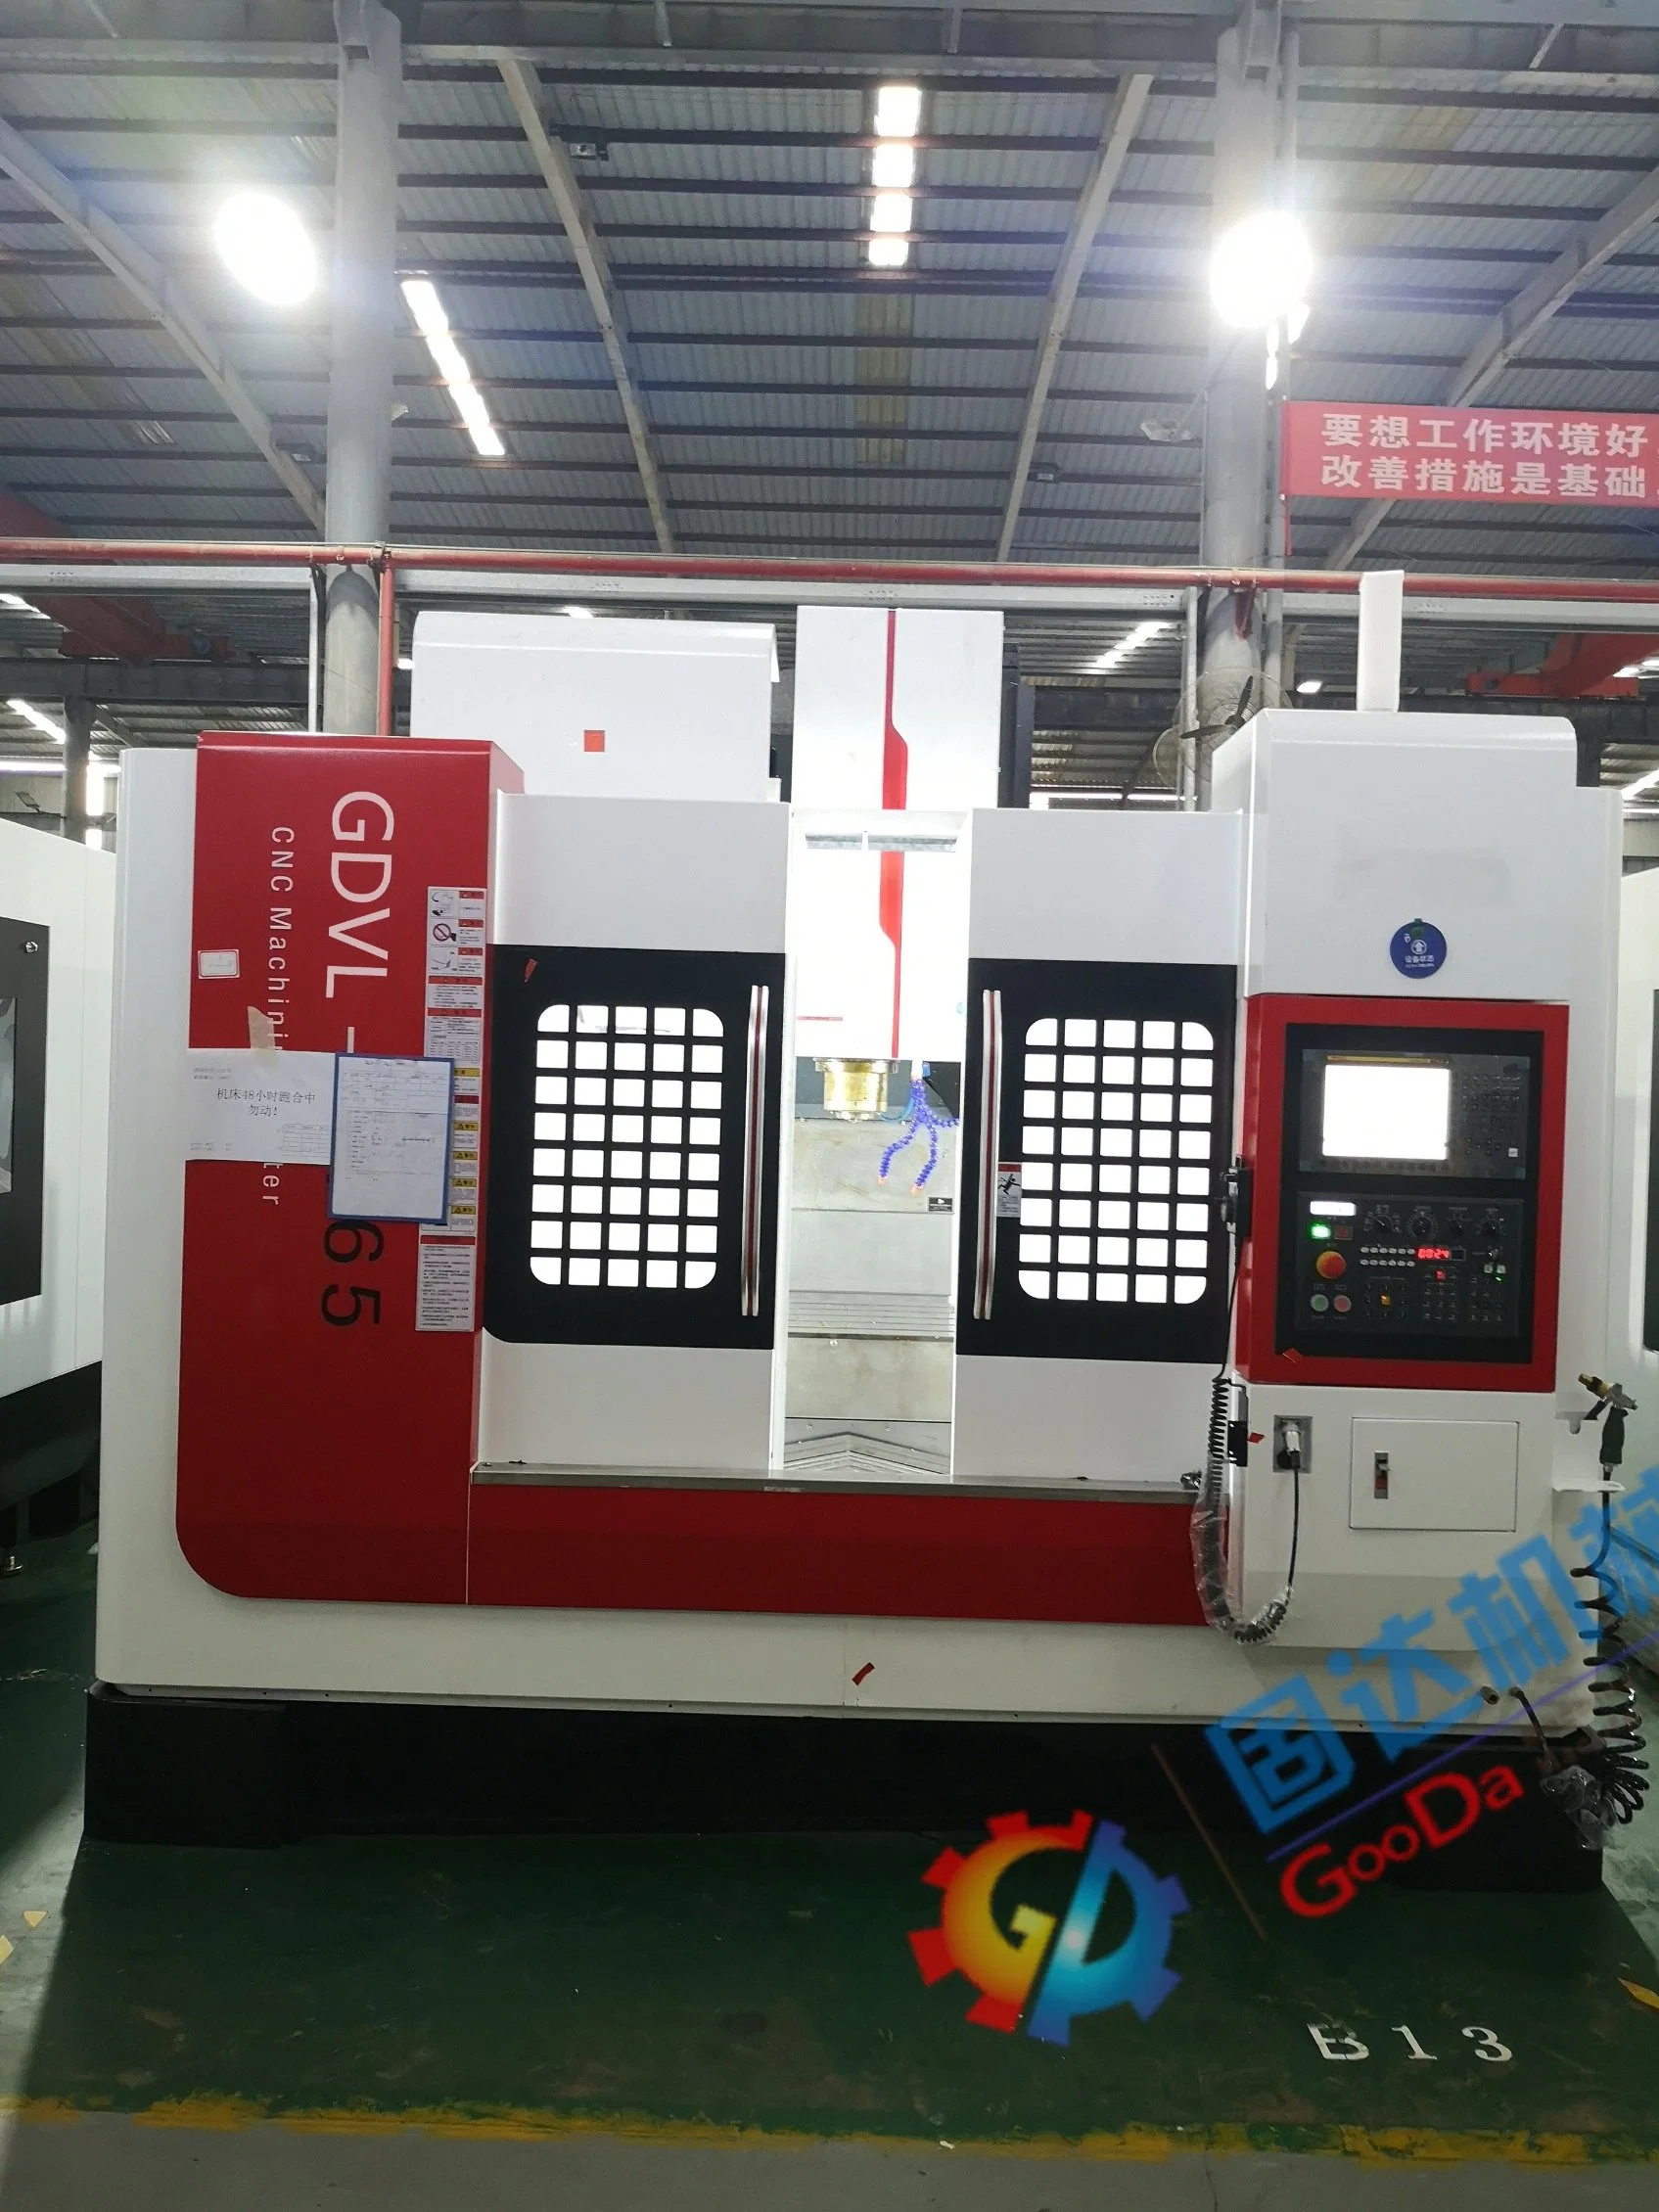 Gooda CNC/Mnc Cheap Price High Speed Metal-Cutting CNC Machine with RoHS/CE